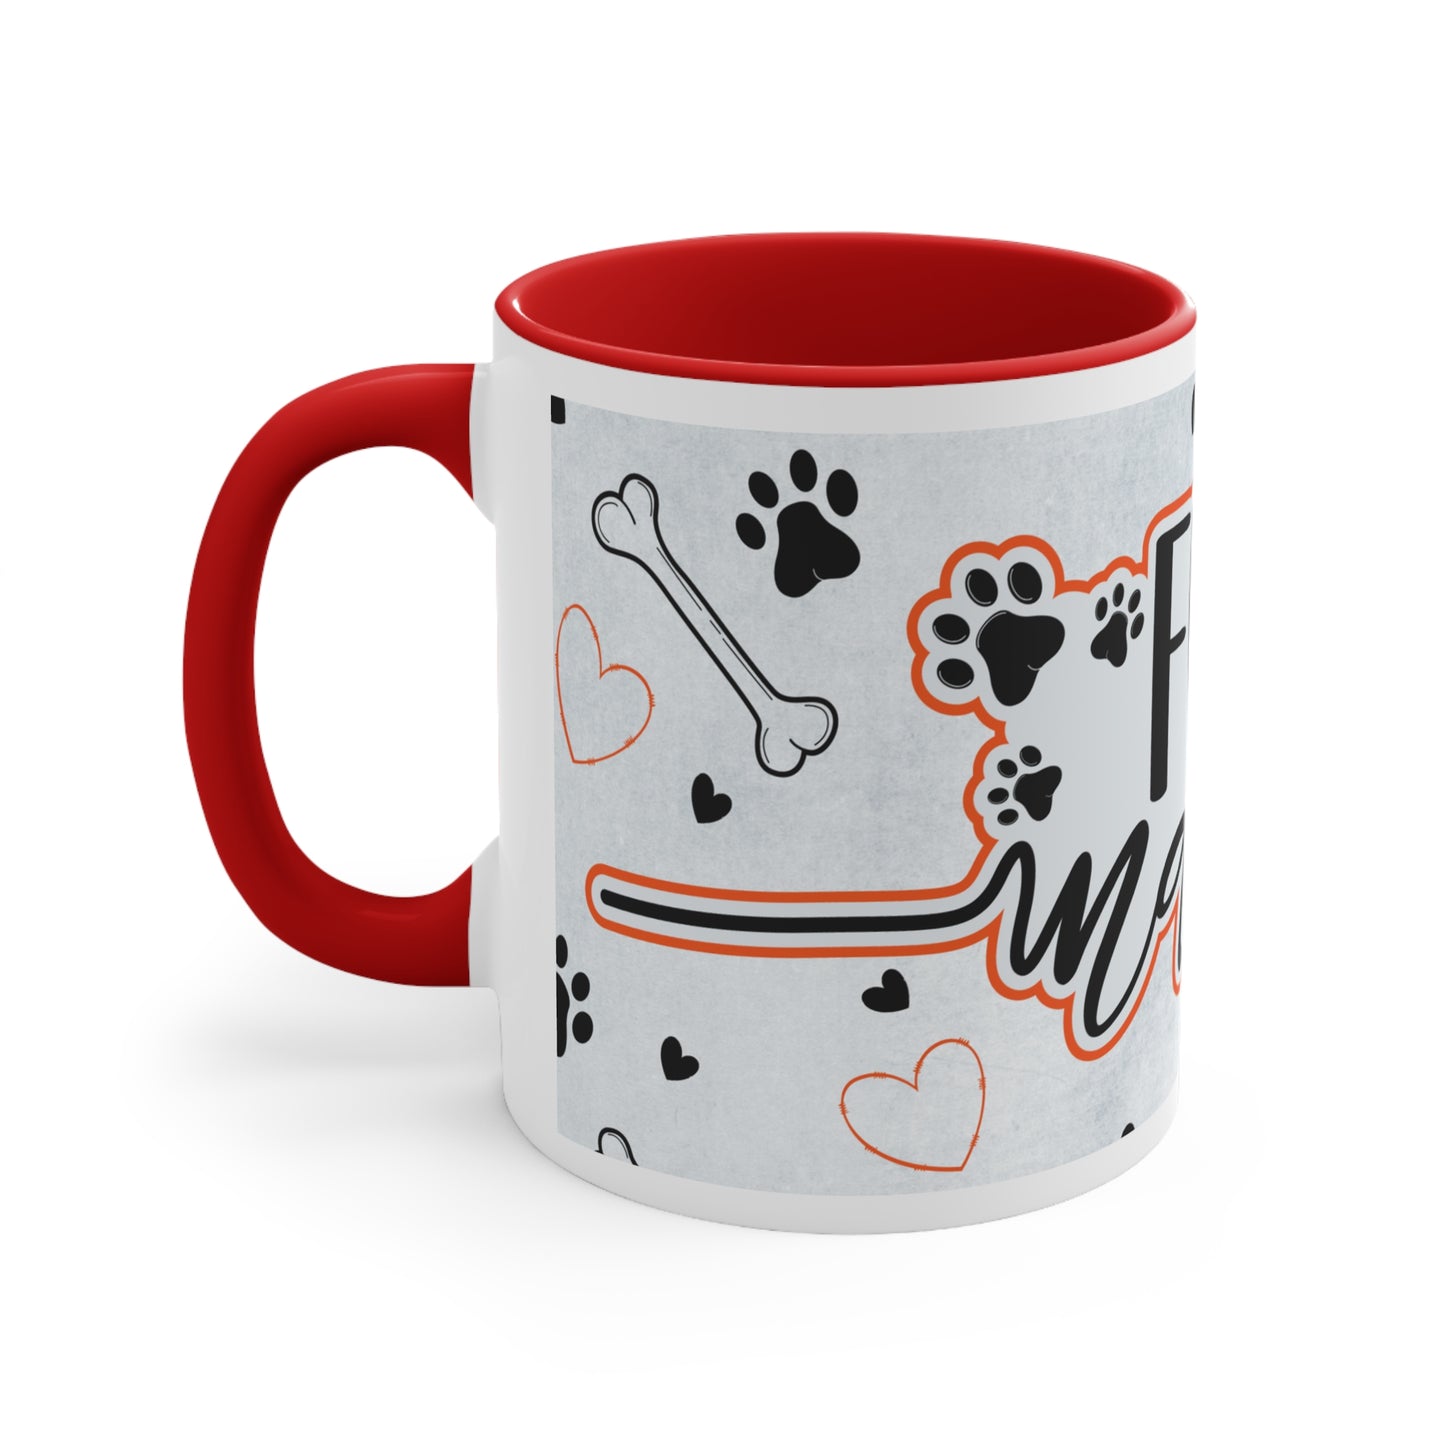 Fur Mama Accent Coffee Mug, 11oz - Three Bears Boutique